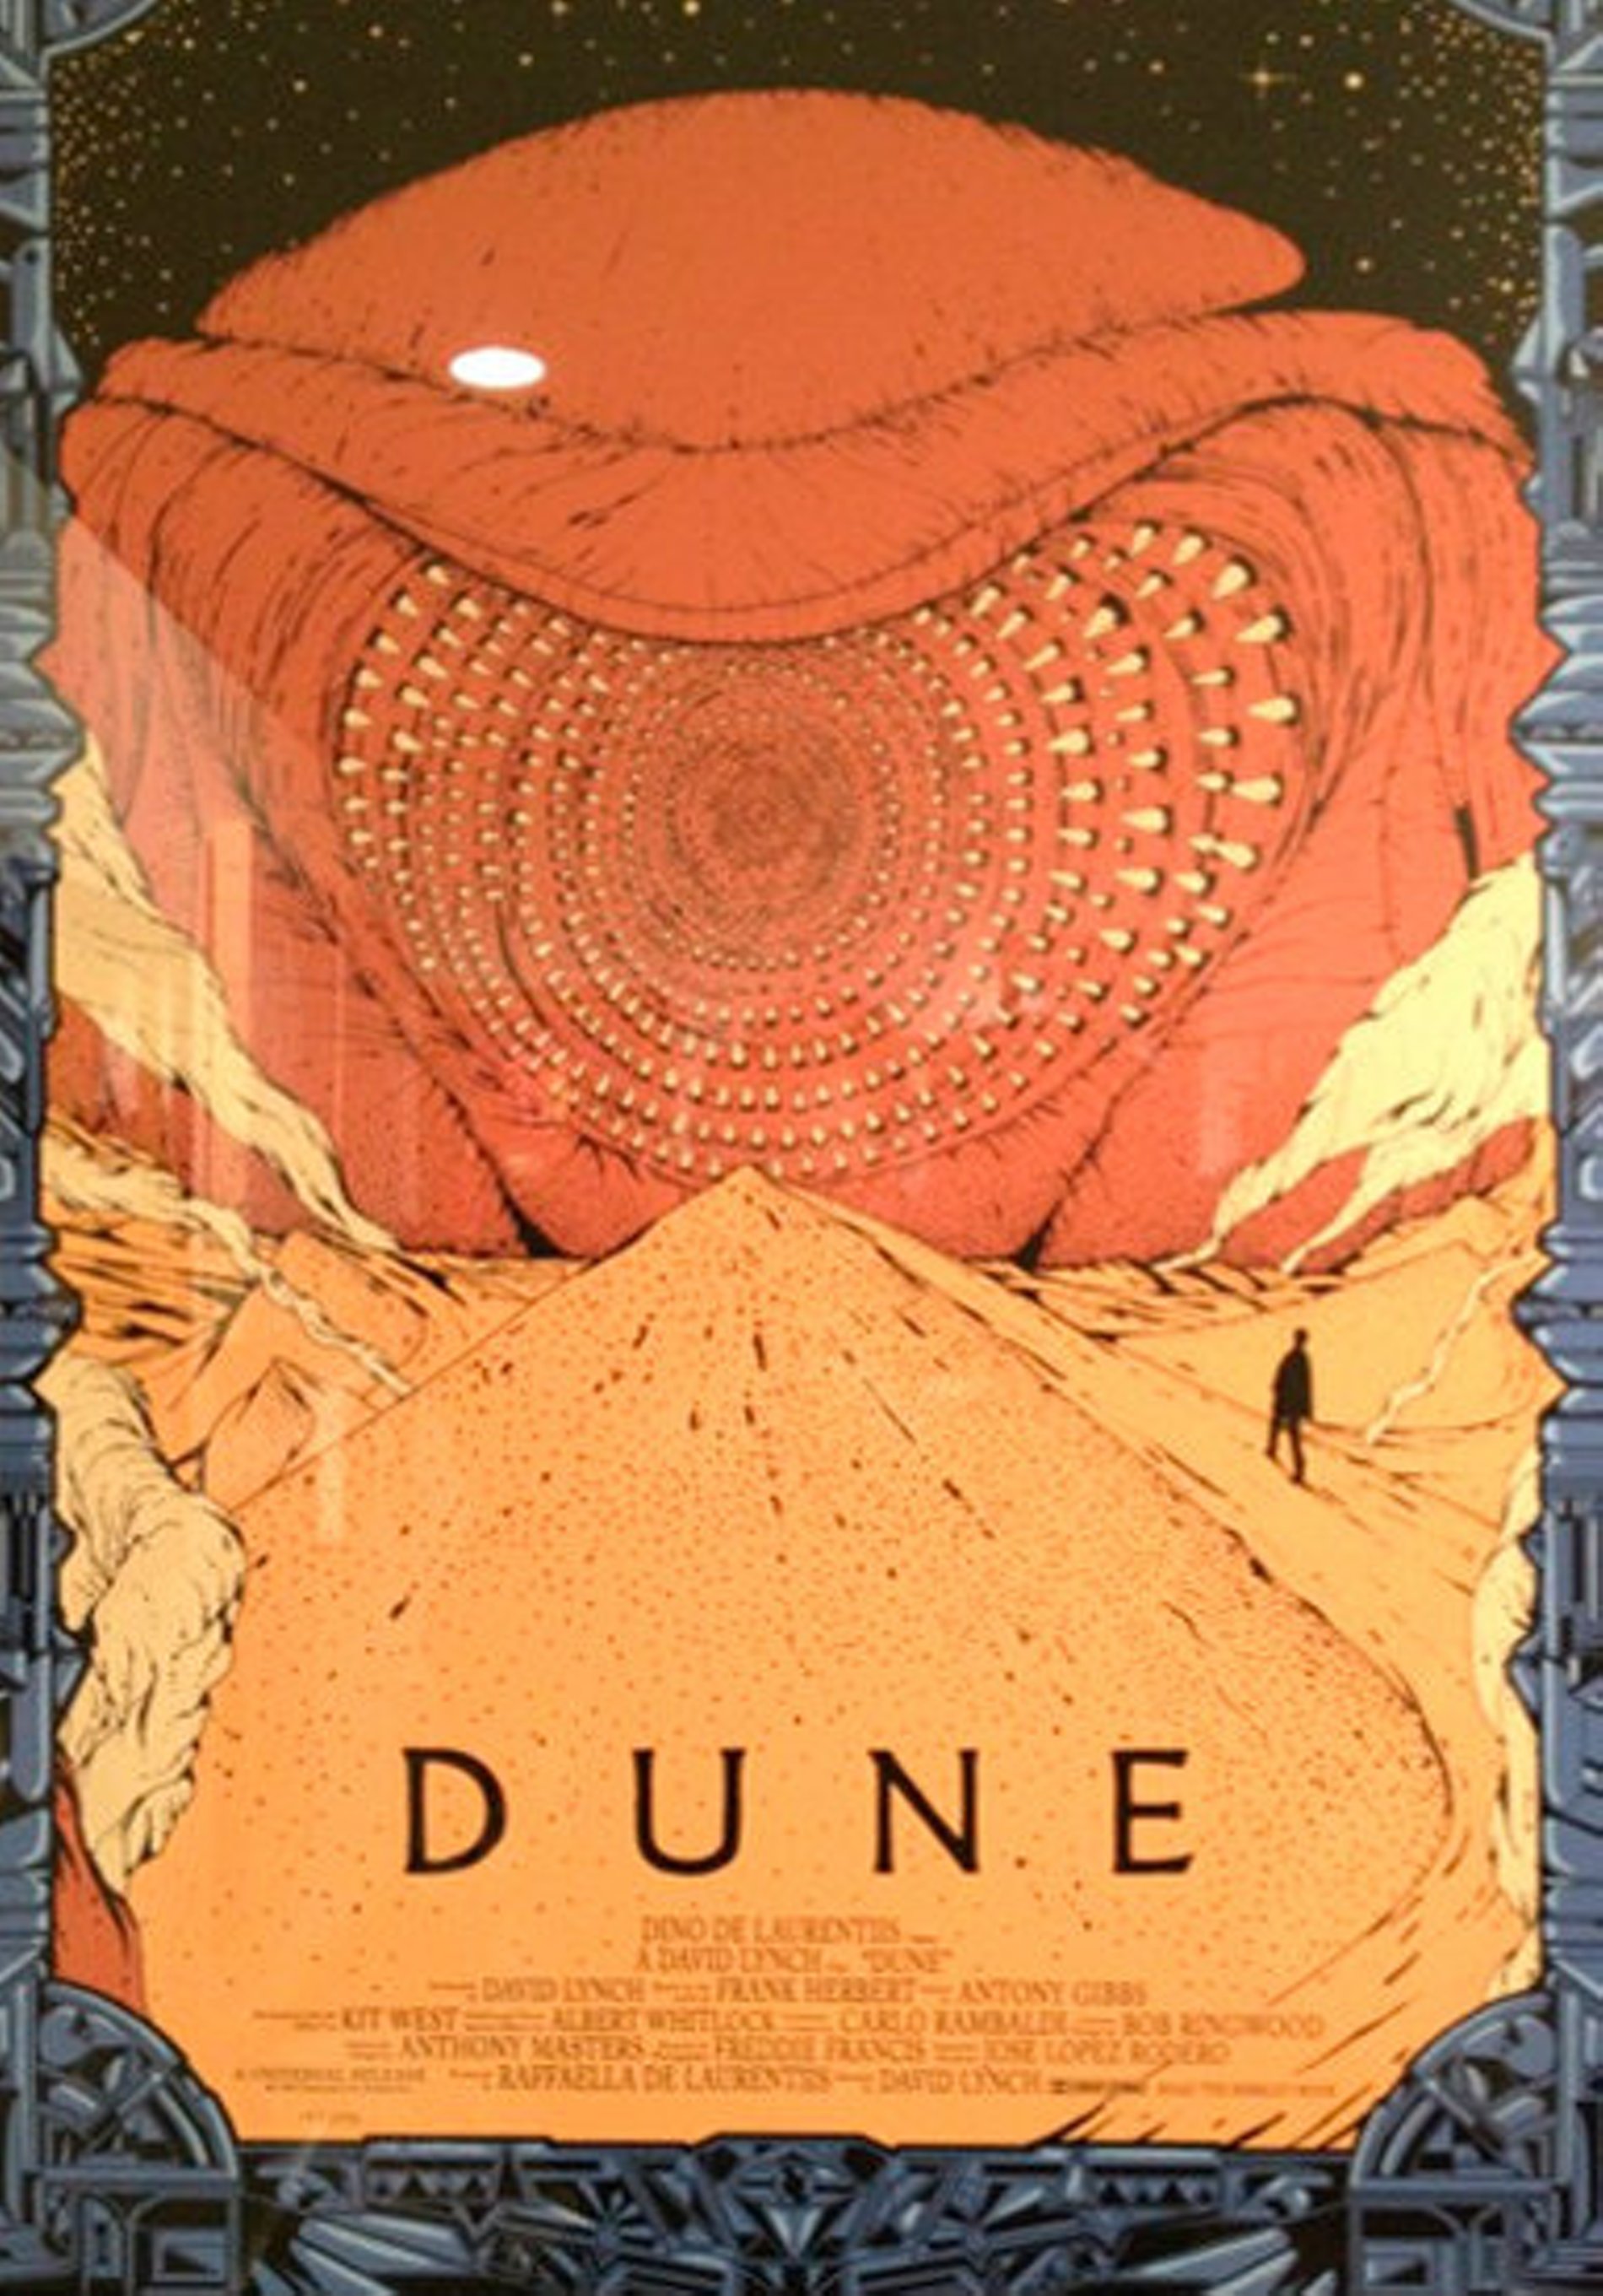 Dune poster. Герберт Фрэнк - Дюна постеры. Дюна 1984 арт. Дюна арт Постер. Dune. 1984.Постер.